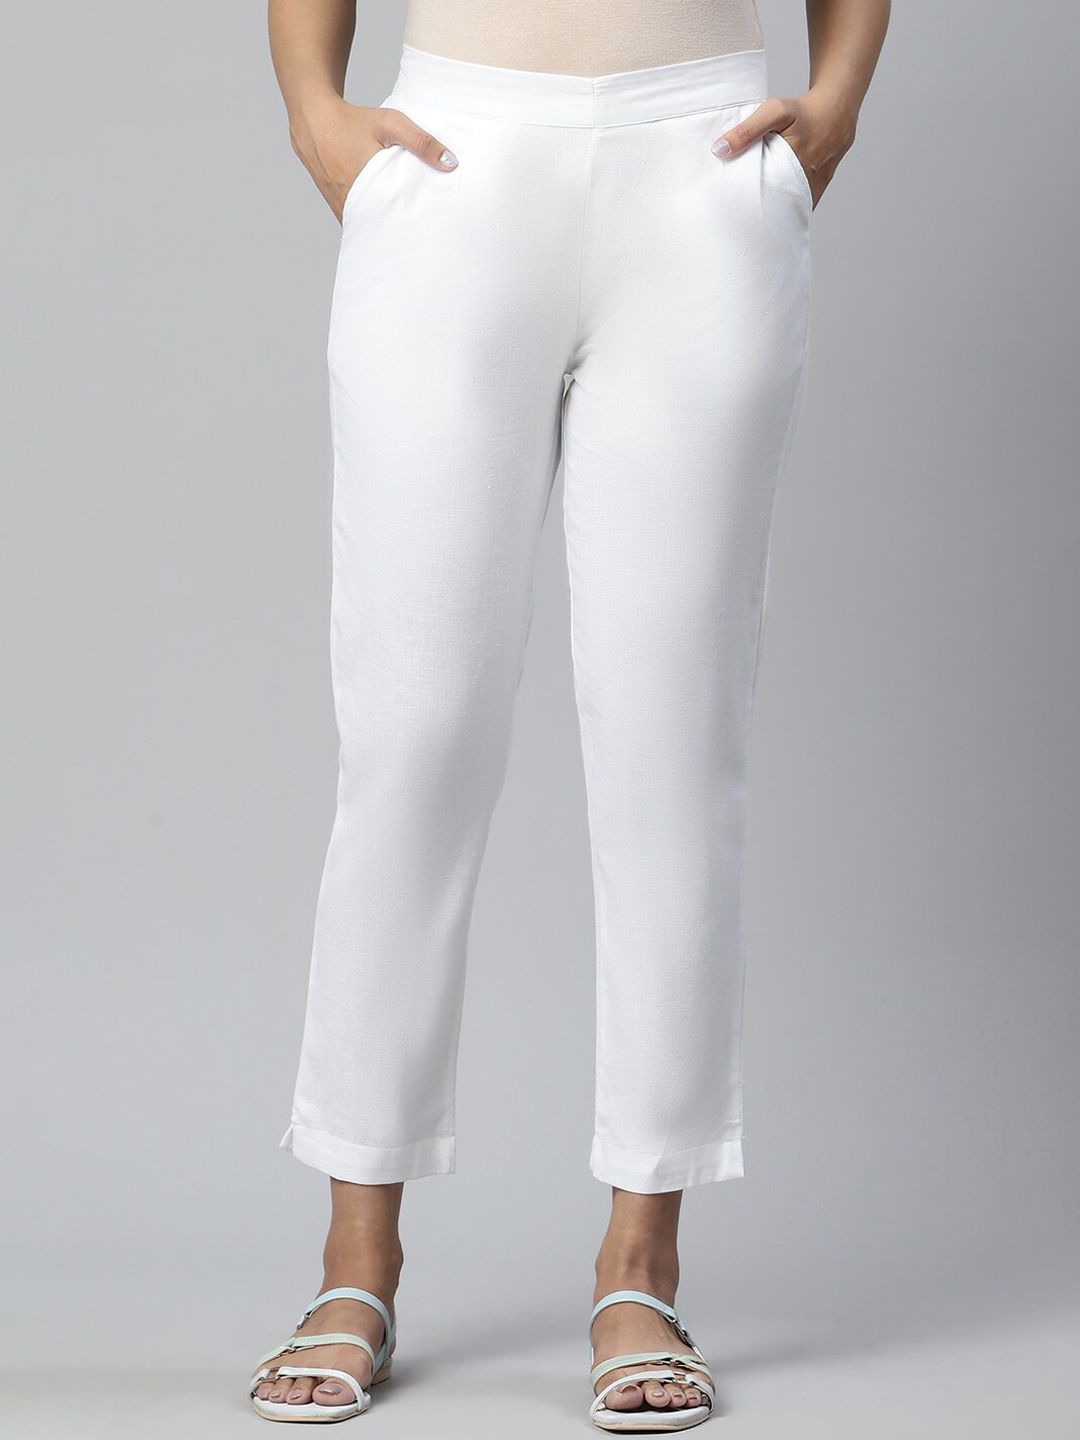 AURELIA Women Regular Fit White Trousers Price in India